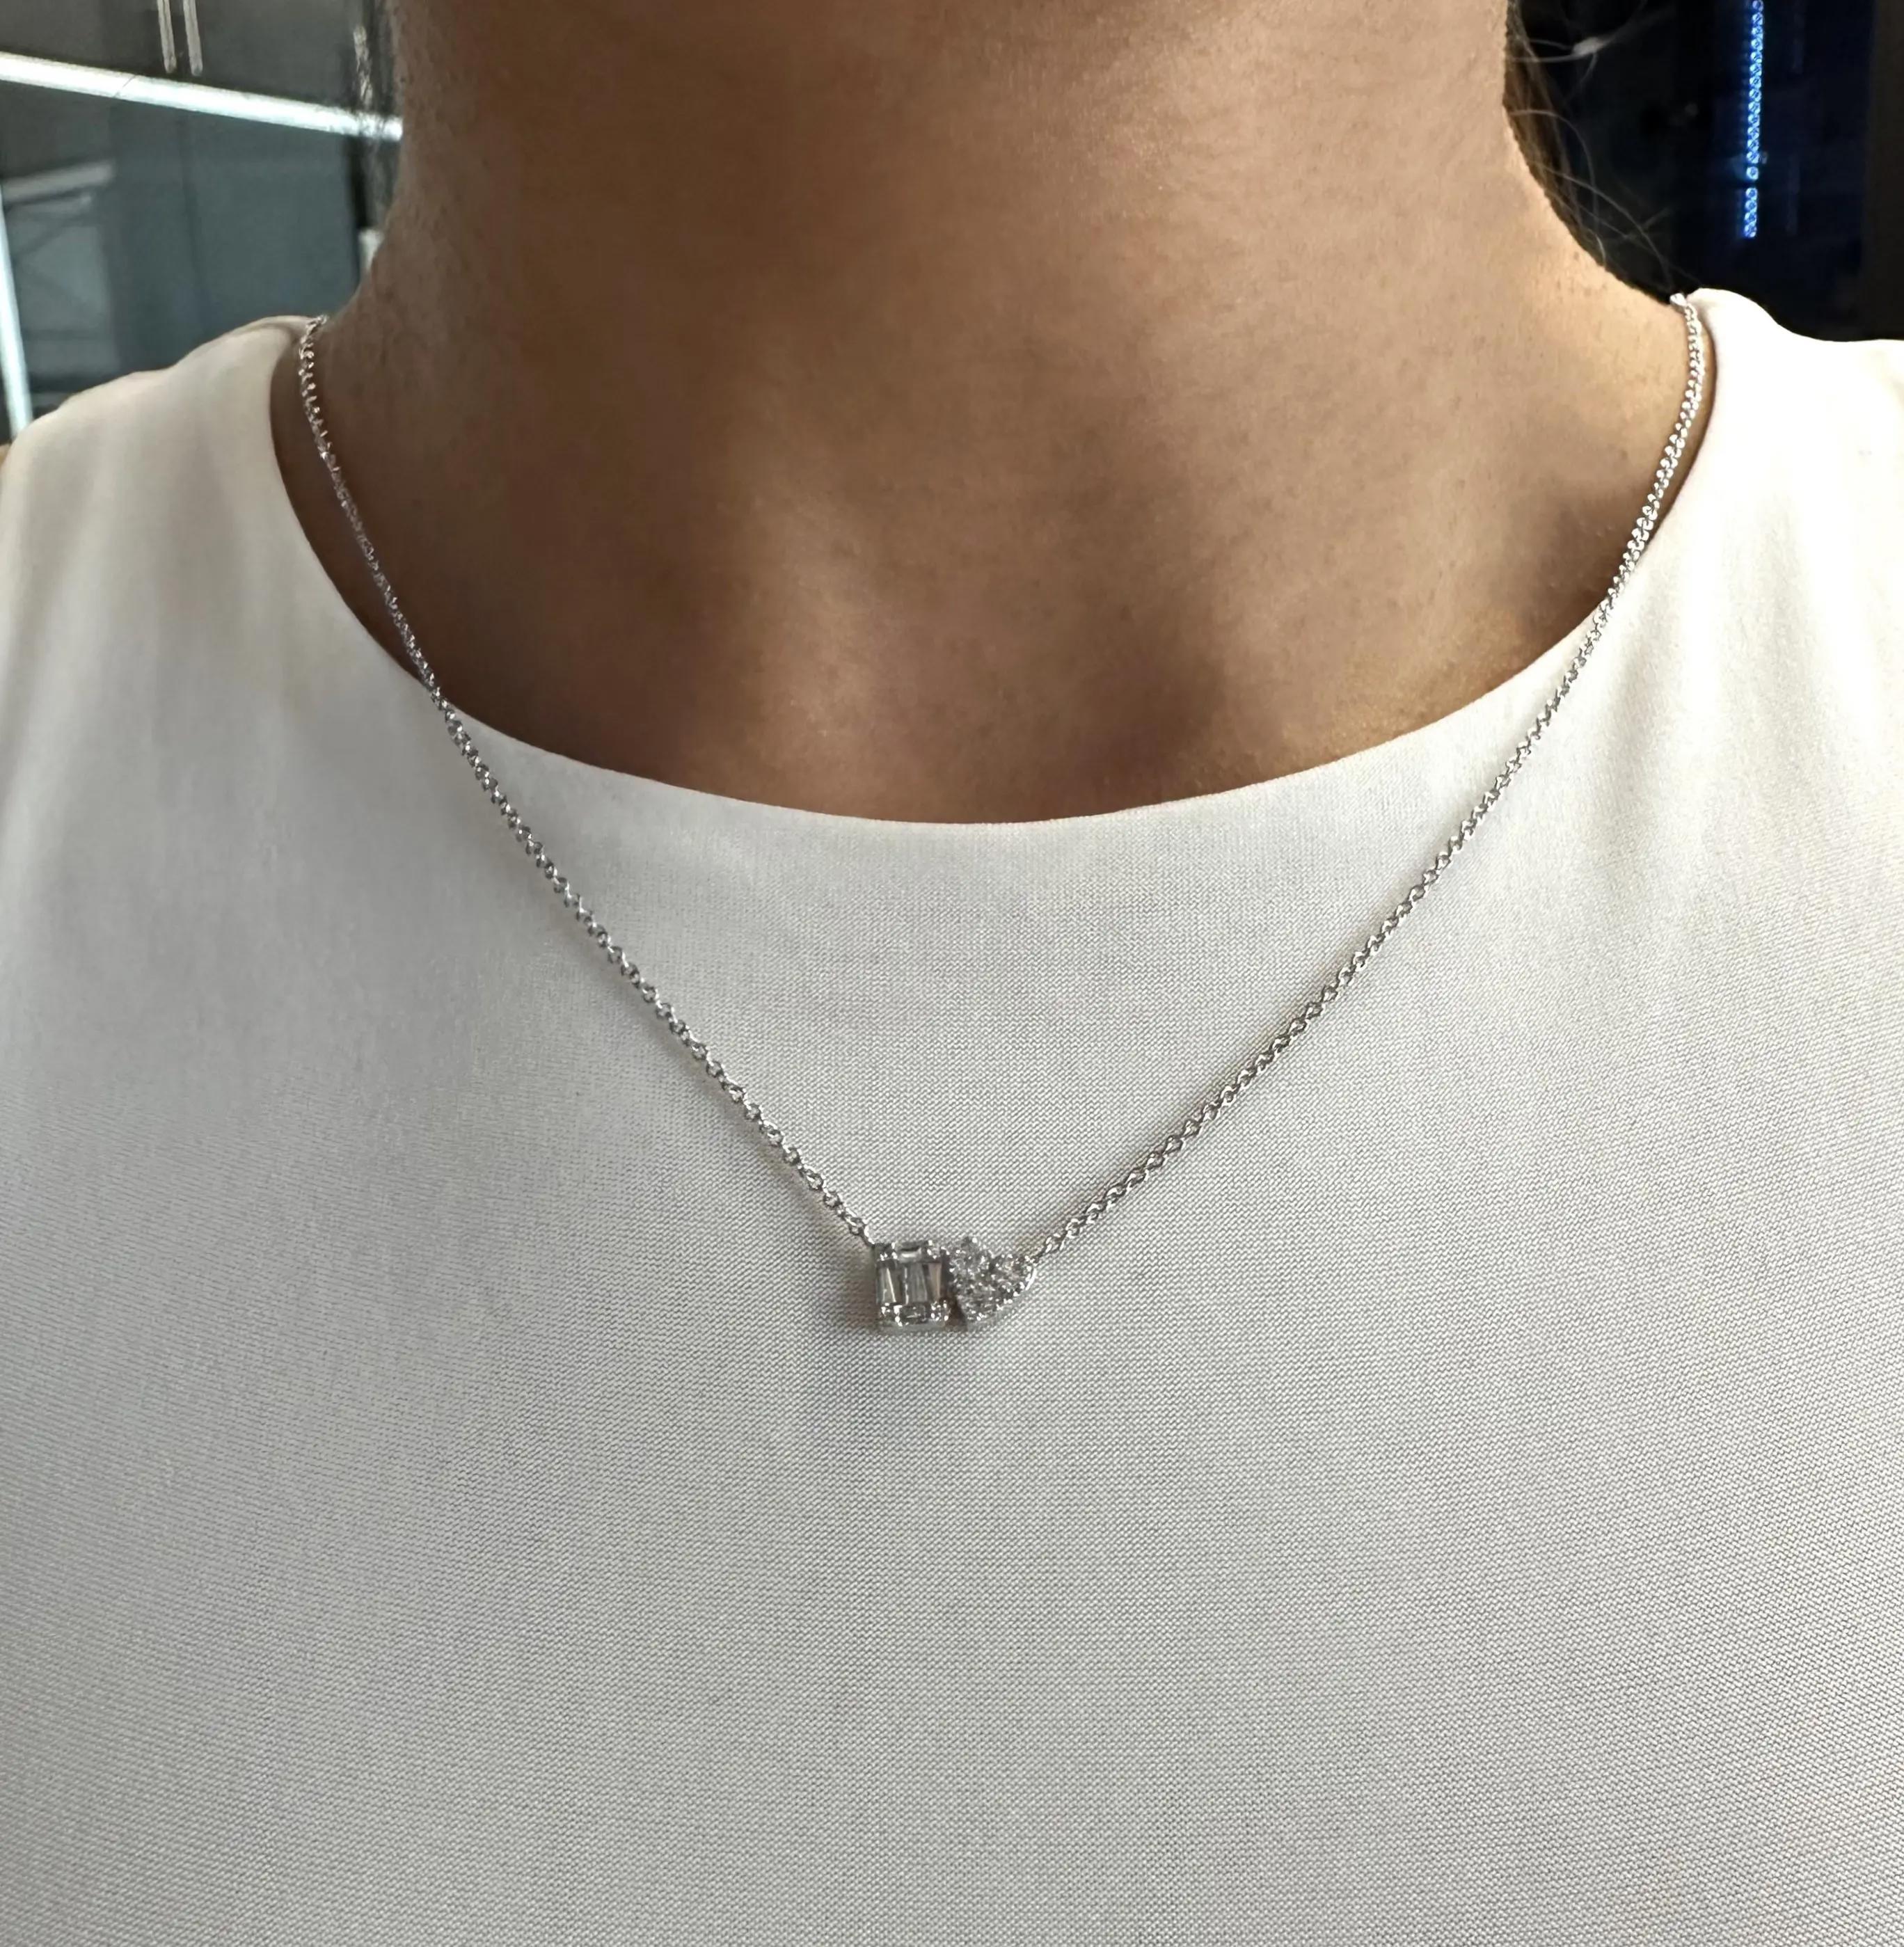 Women's Baguette And Round Cut Diamond Pendant Necklace 14K White Gold 0.44Cttw For Sale